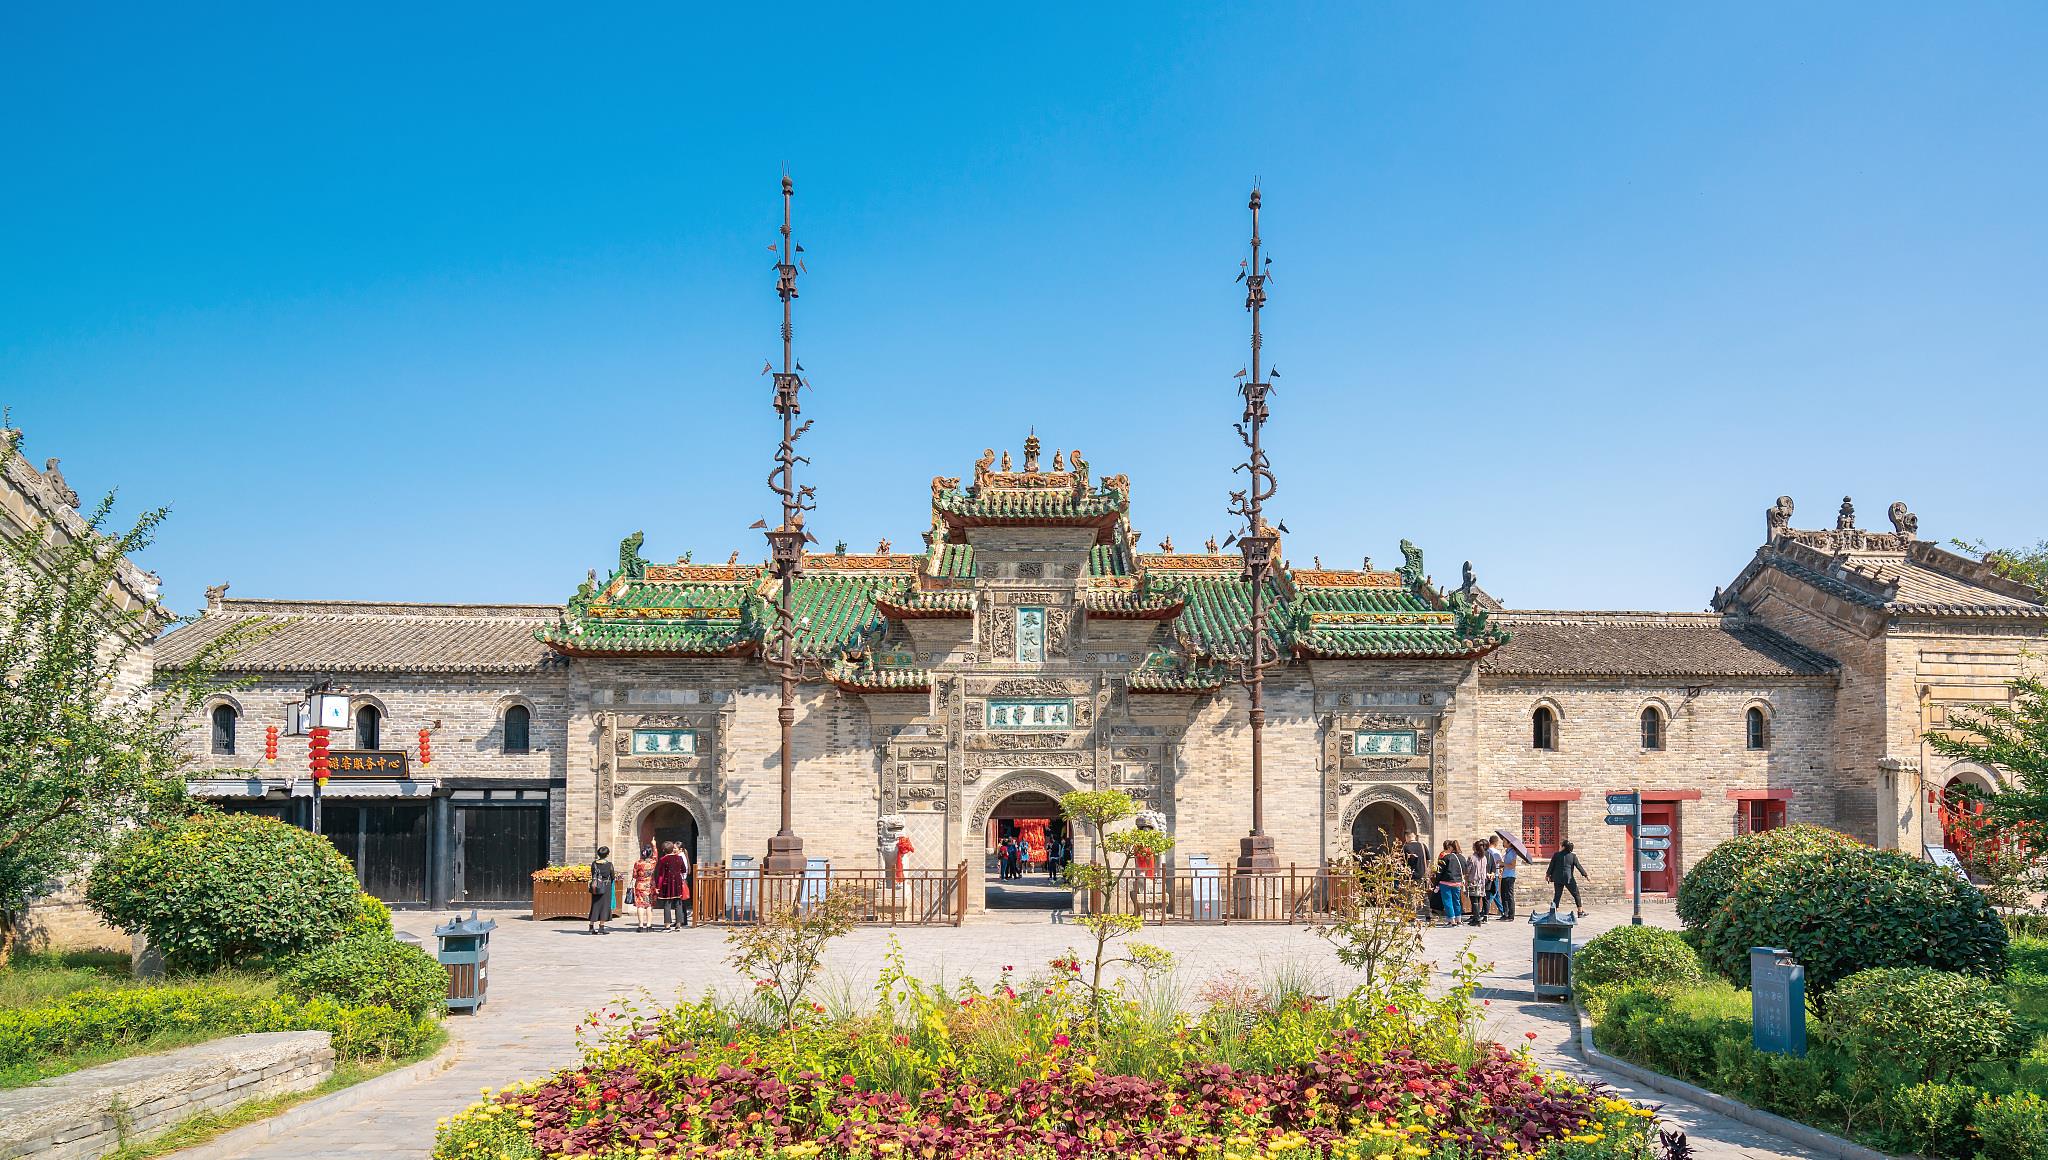 zzd 正文花戏楼是亳州名胜古迹,以旗杆,砖雕,木雕三绝著称.